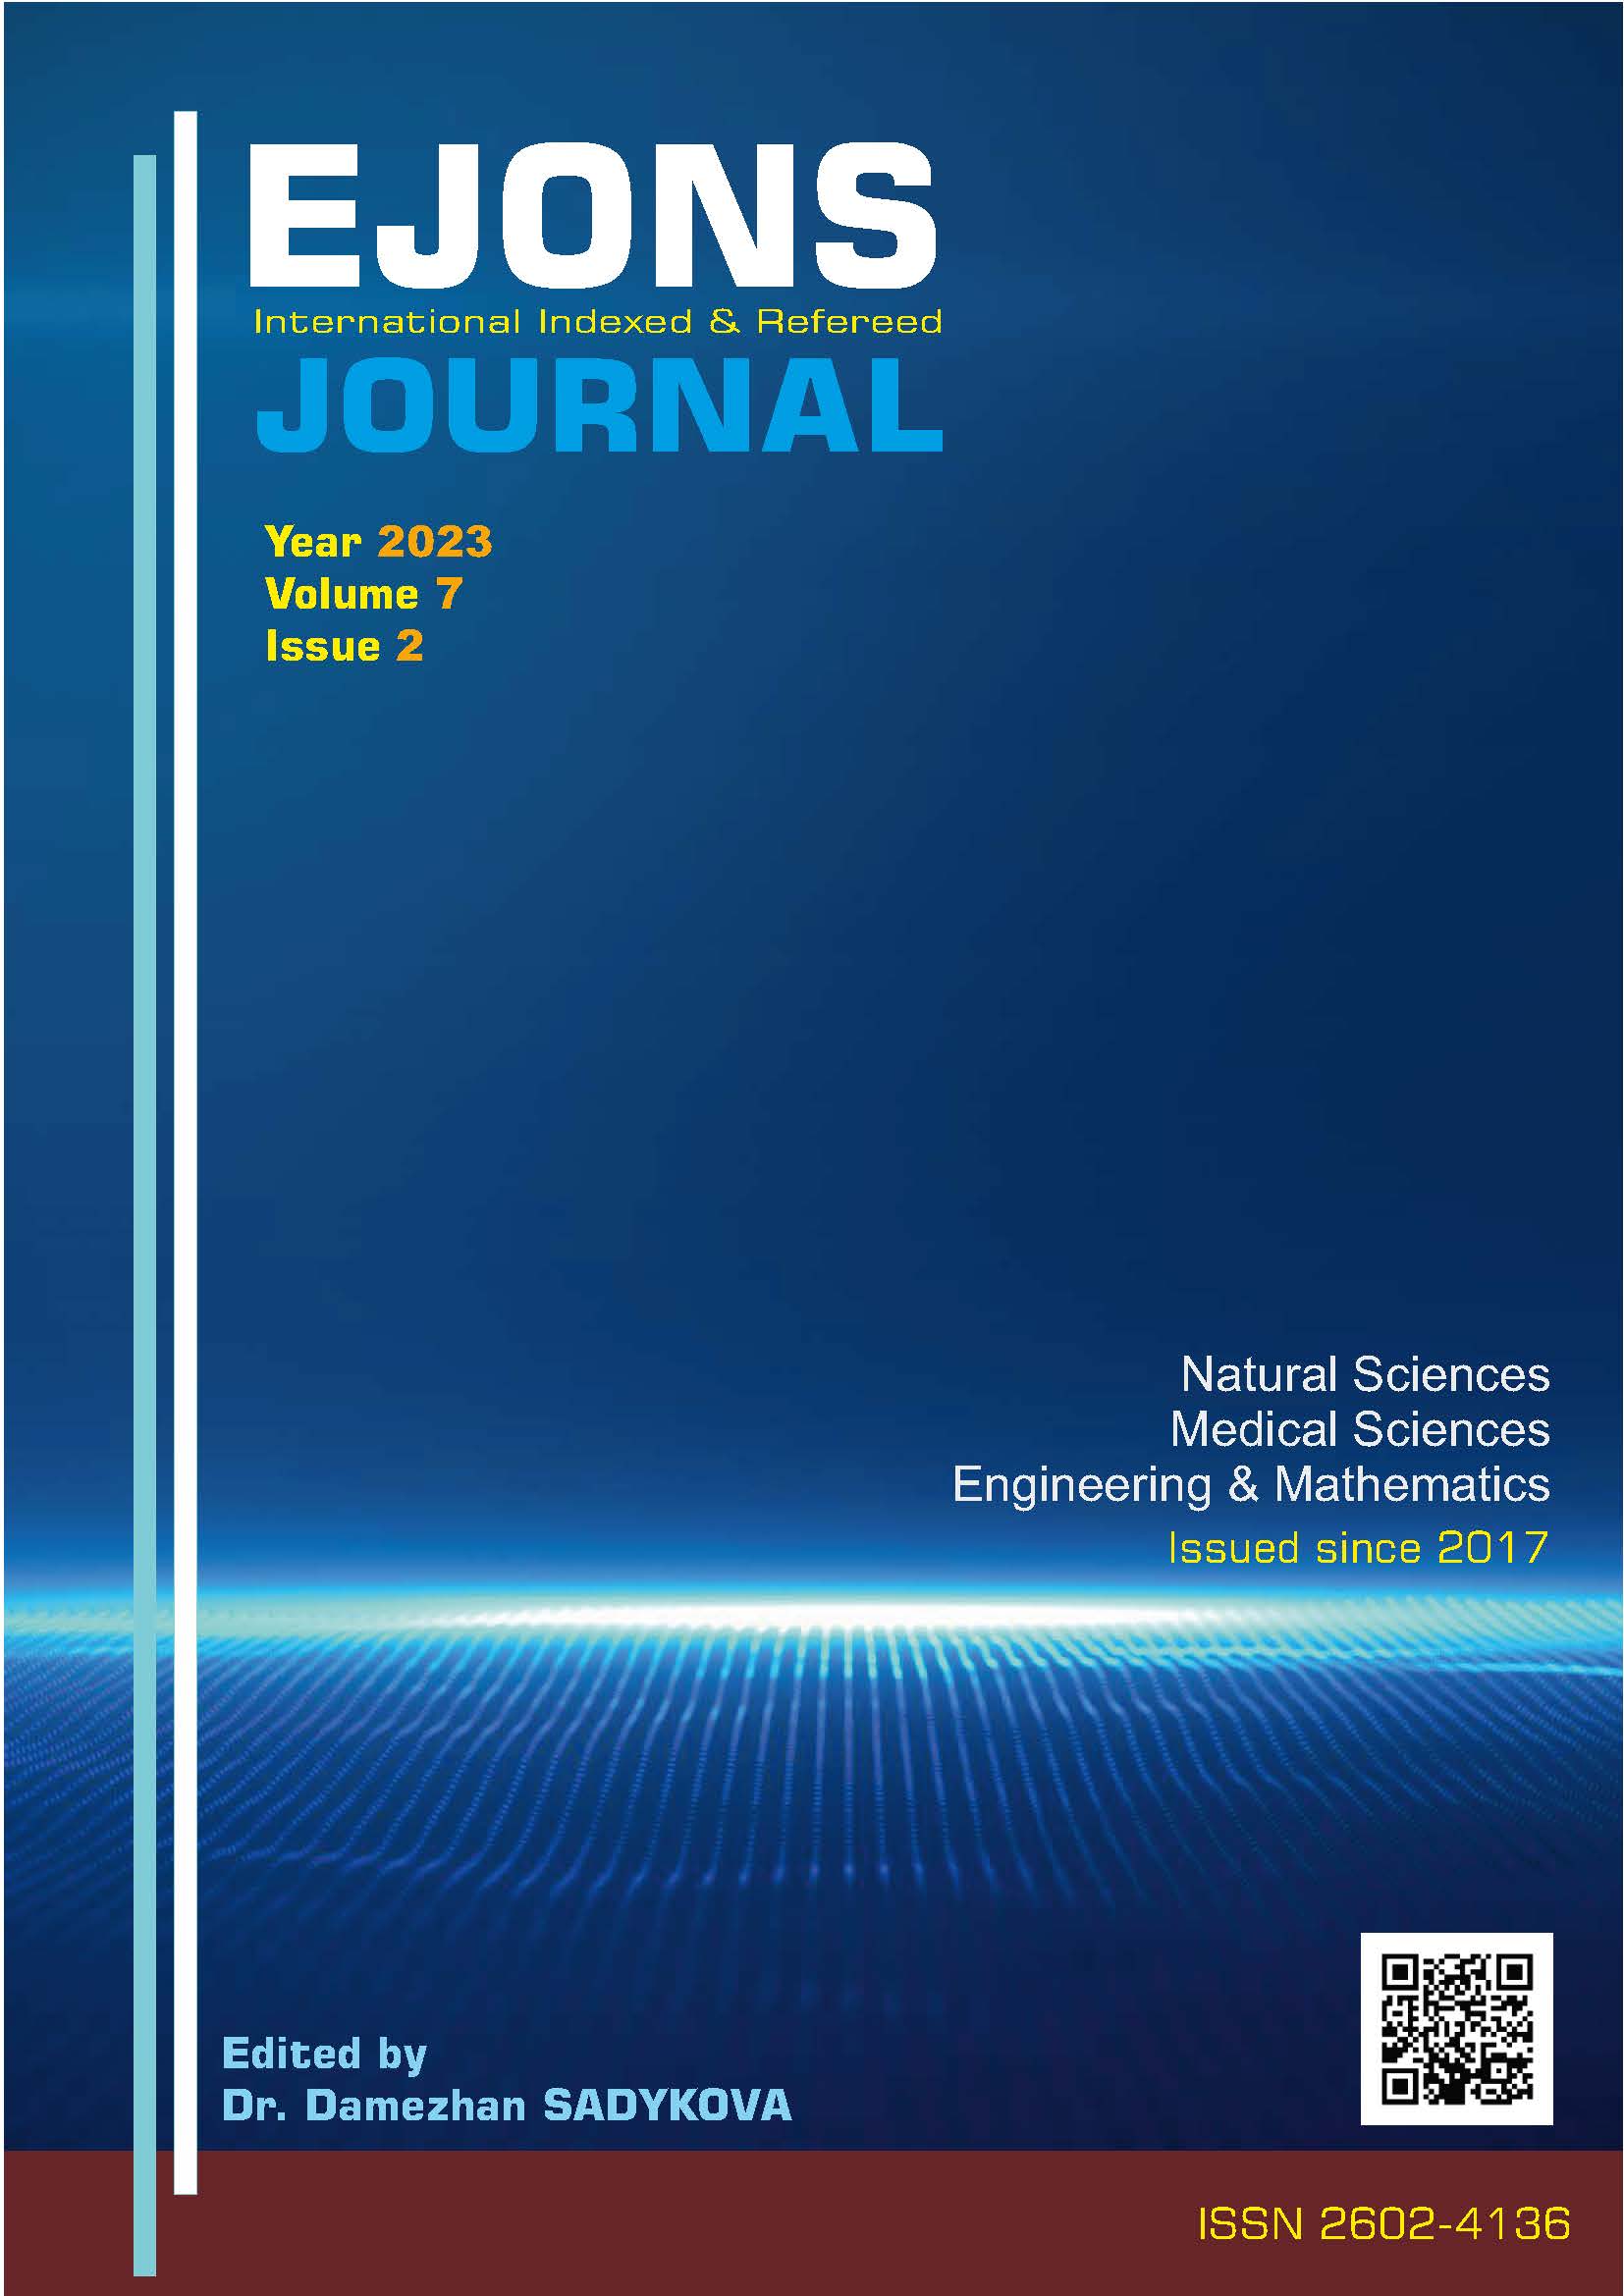 					Cilt 7 Sayı 2 (2023): EJONS Journal Volume 7 Issue 2 Gör
				